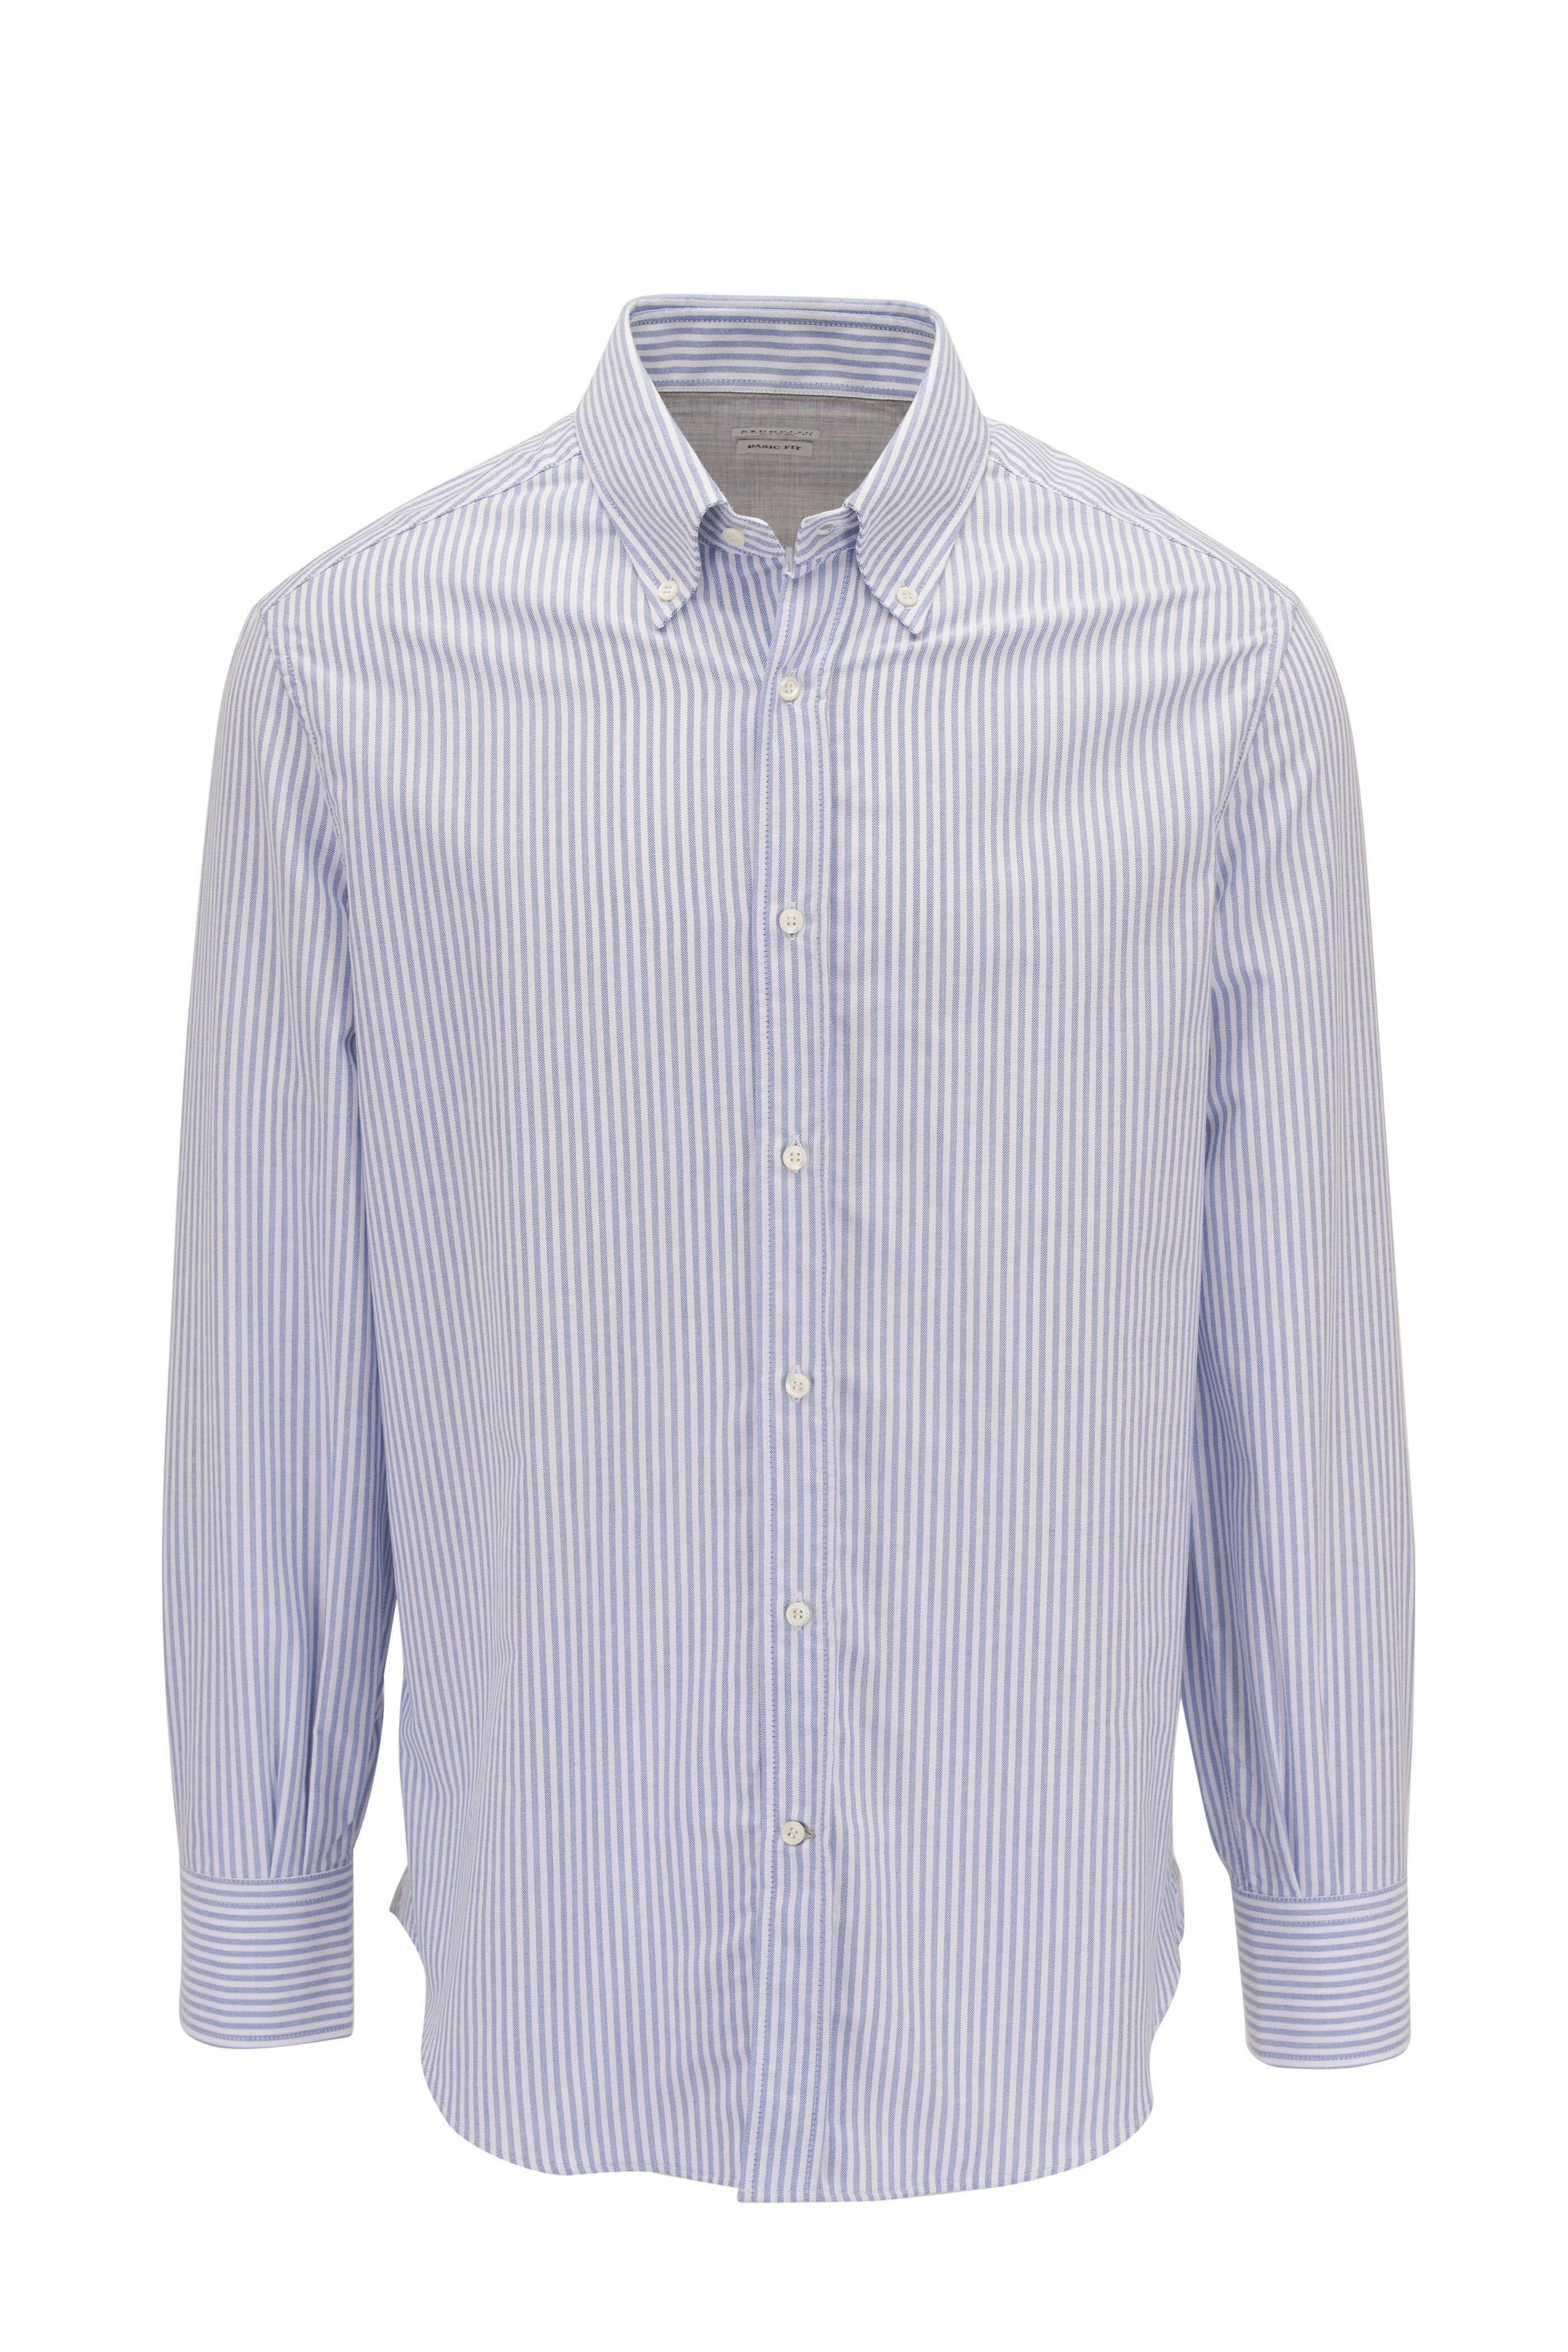 Brunello Cucinelli - Blue and White Oxford Striped Sport Shirt